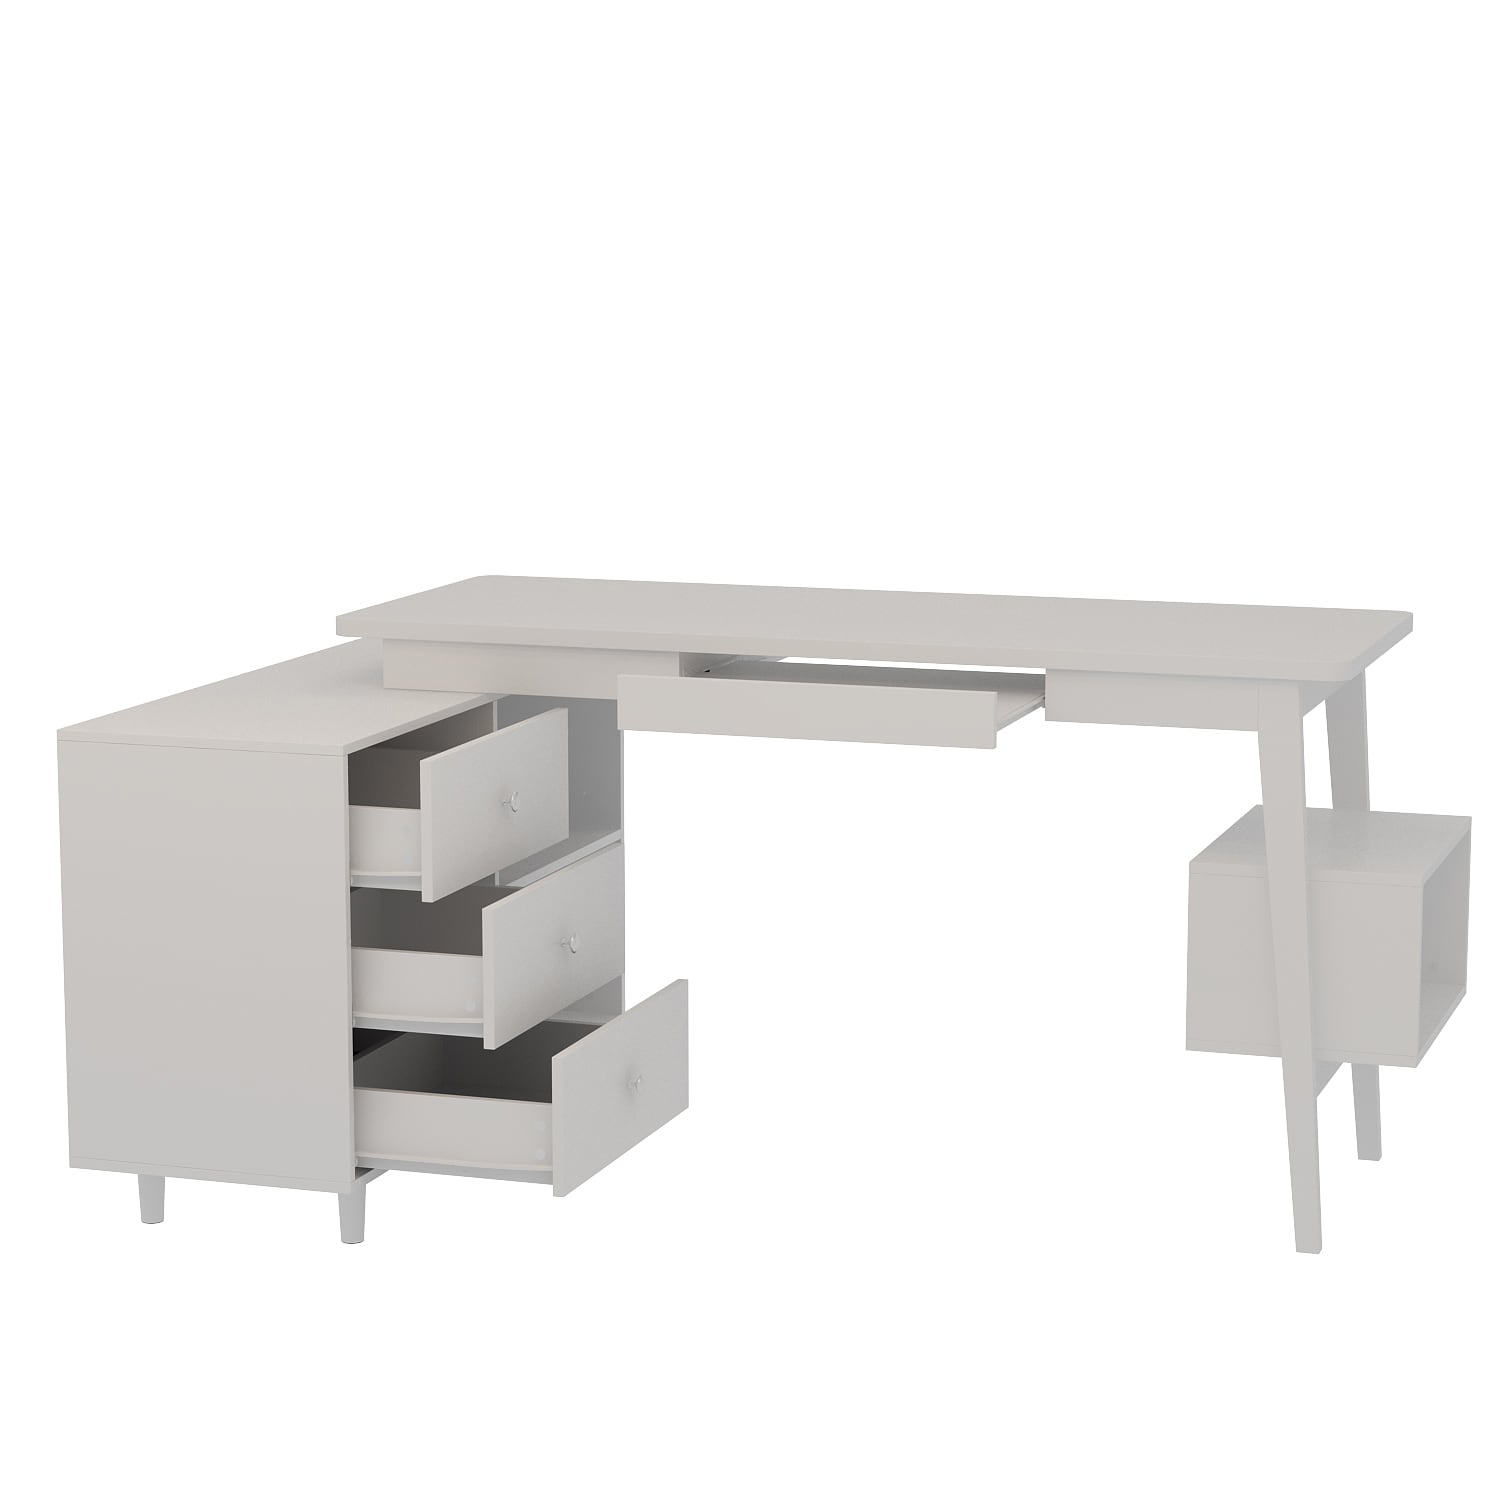 Lindsay Multi Functional L Shaped Executive Hutch Desk w Storage